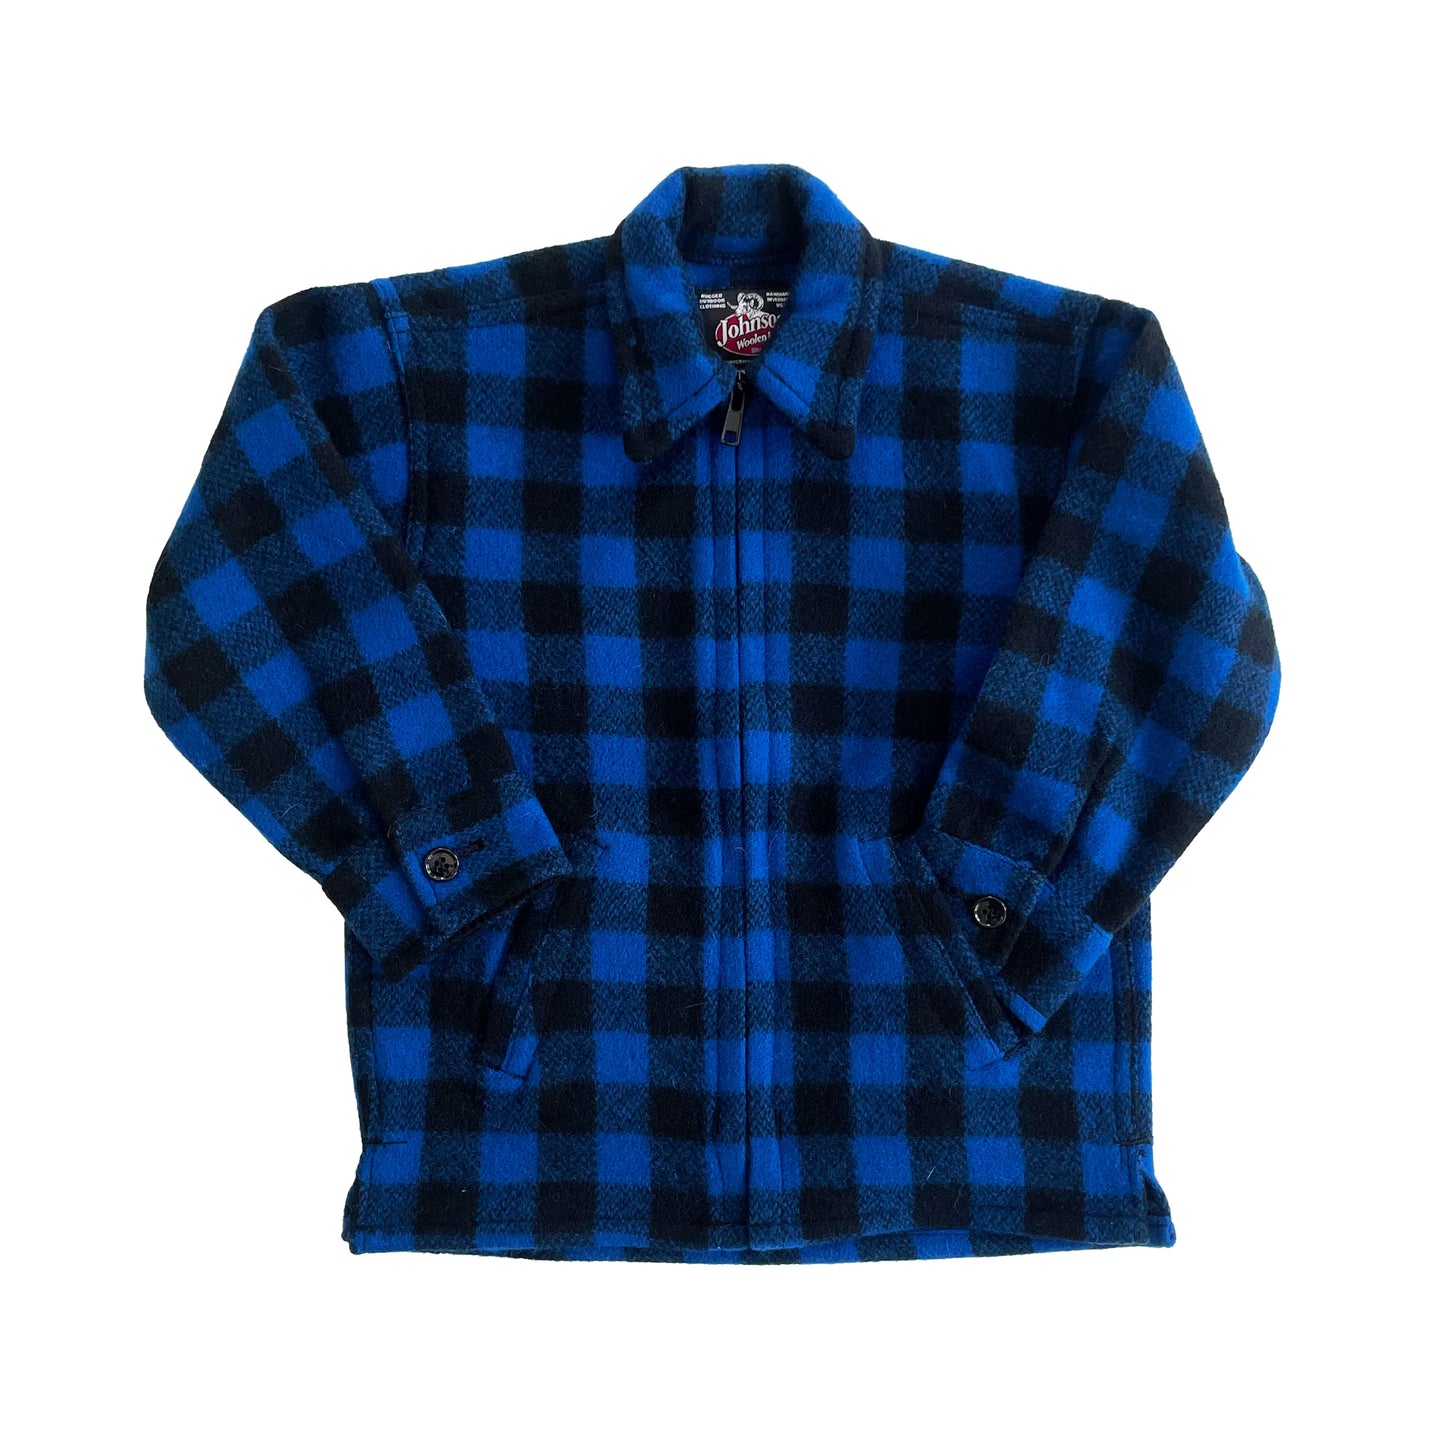 Johnson Woolen Mills Childrens blue and black buffalo check Wool jac shirt